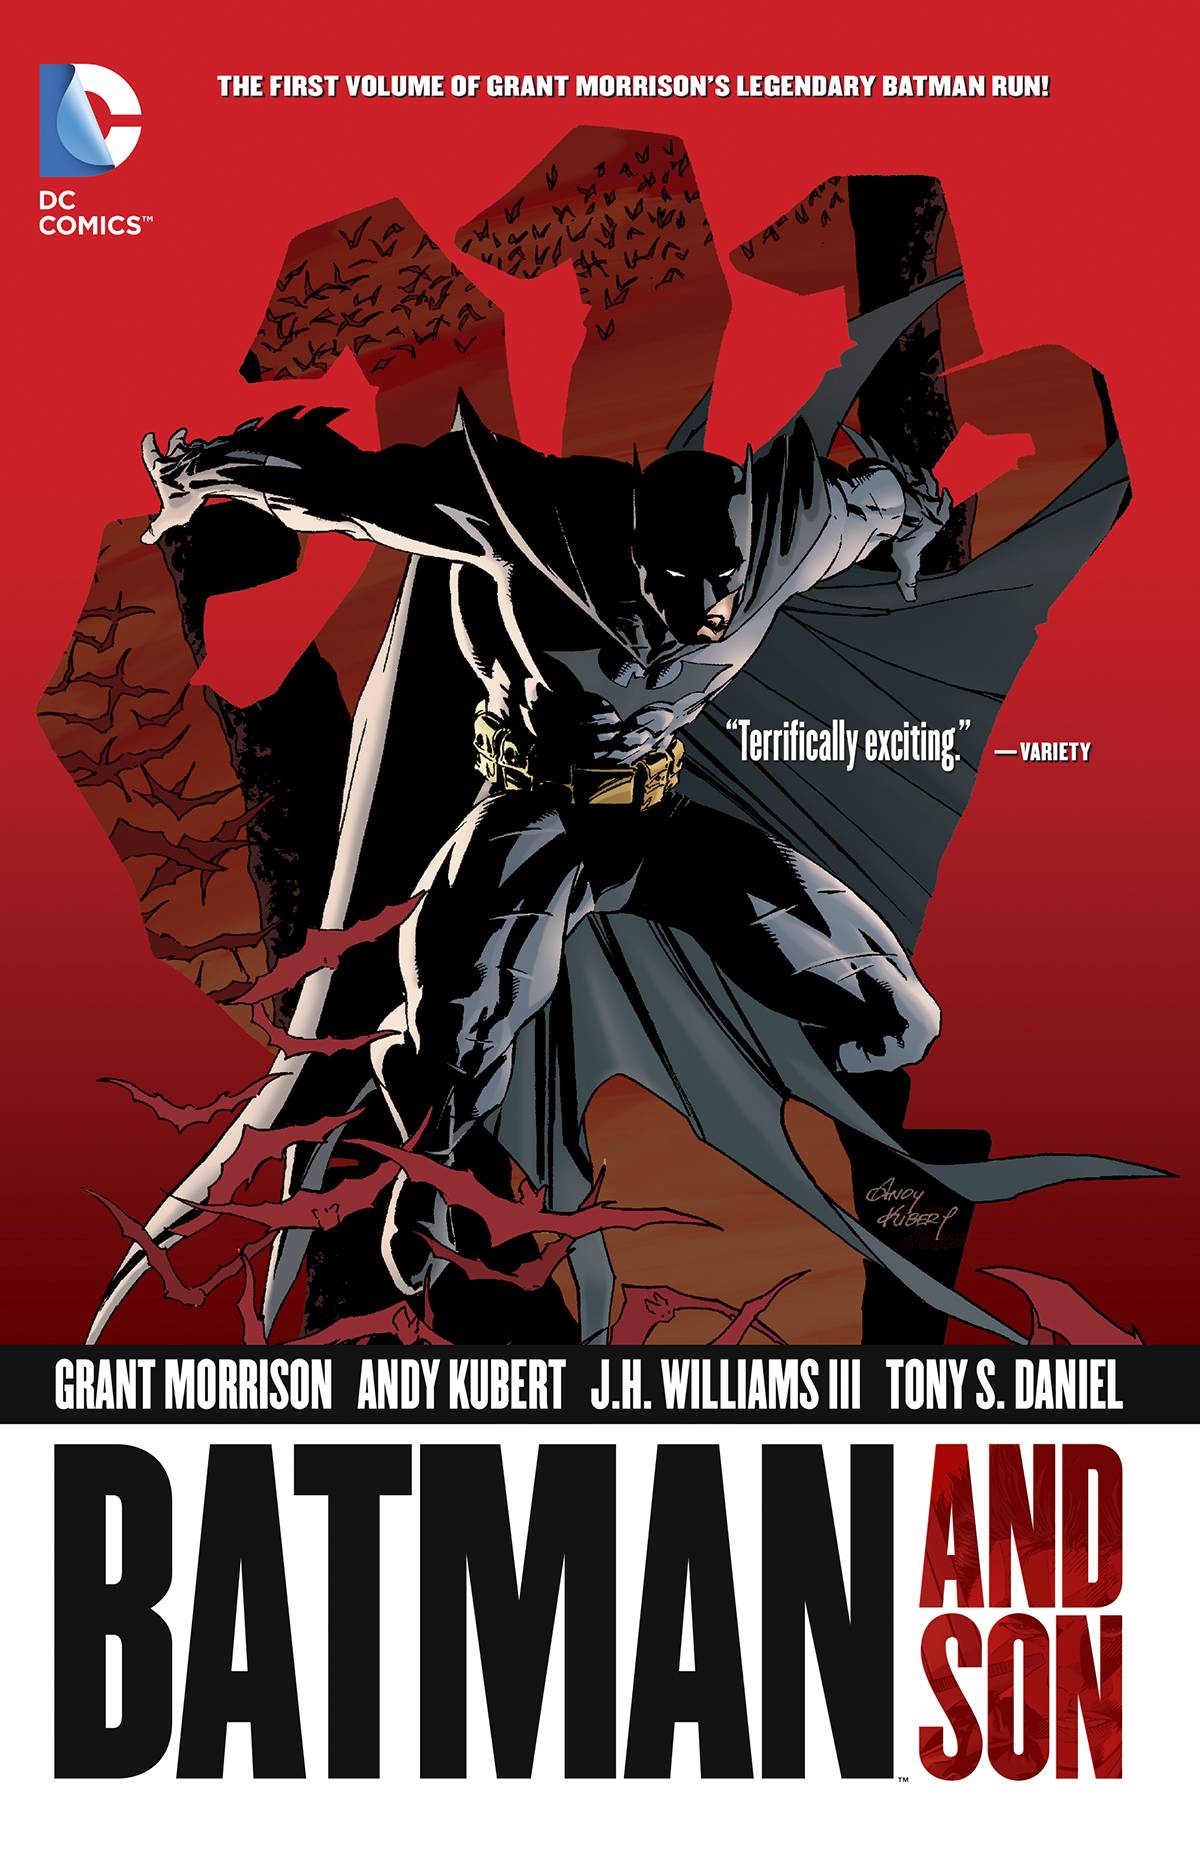 Batman and Son Graphic Novel (2014 Edition)